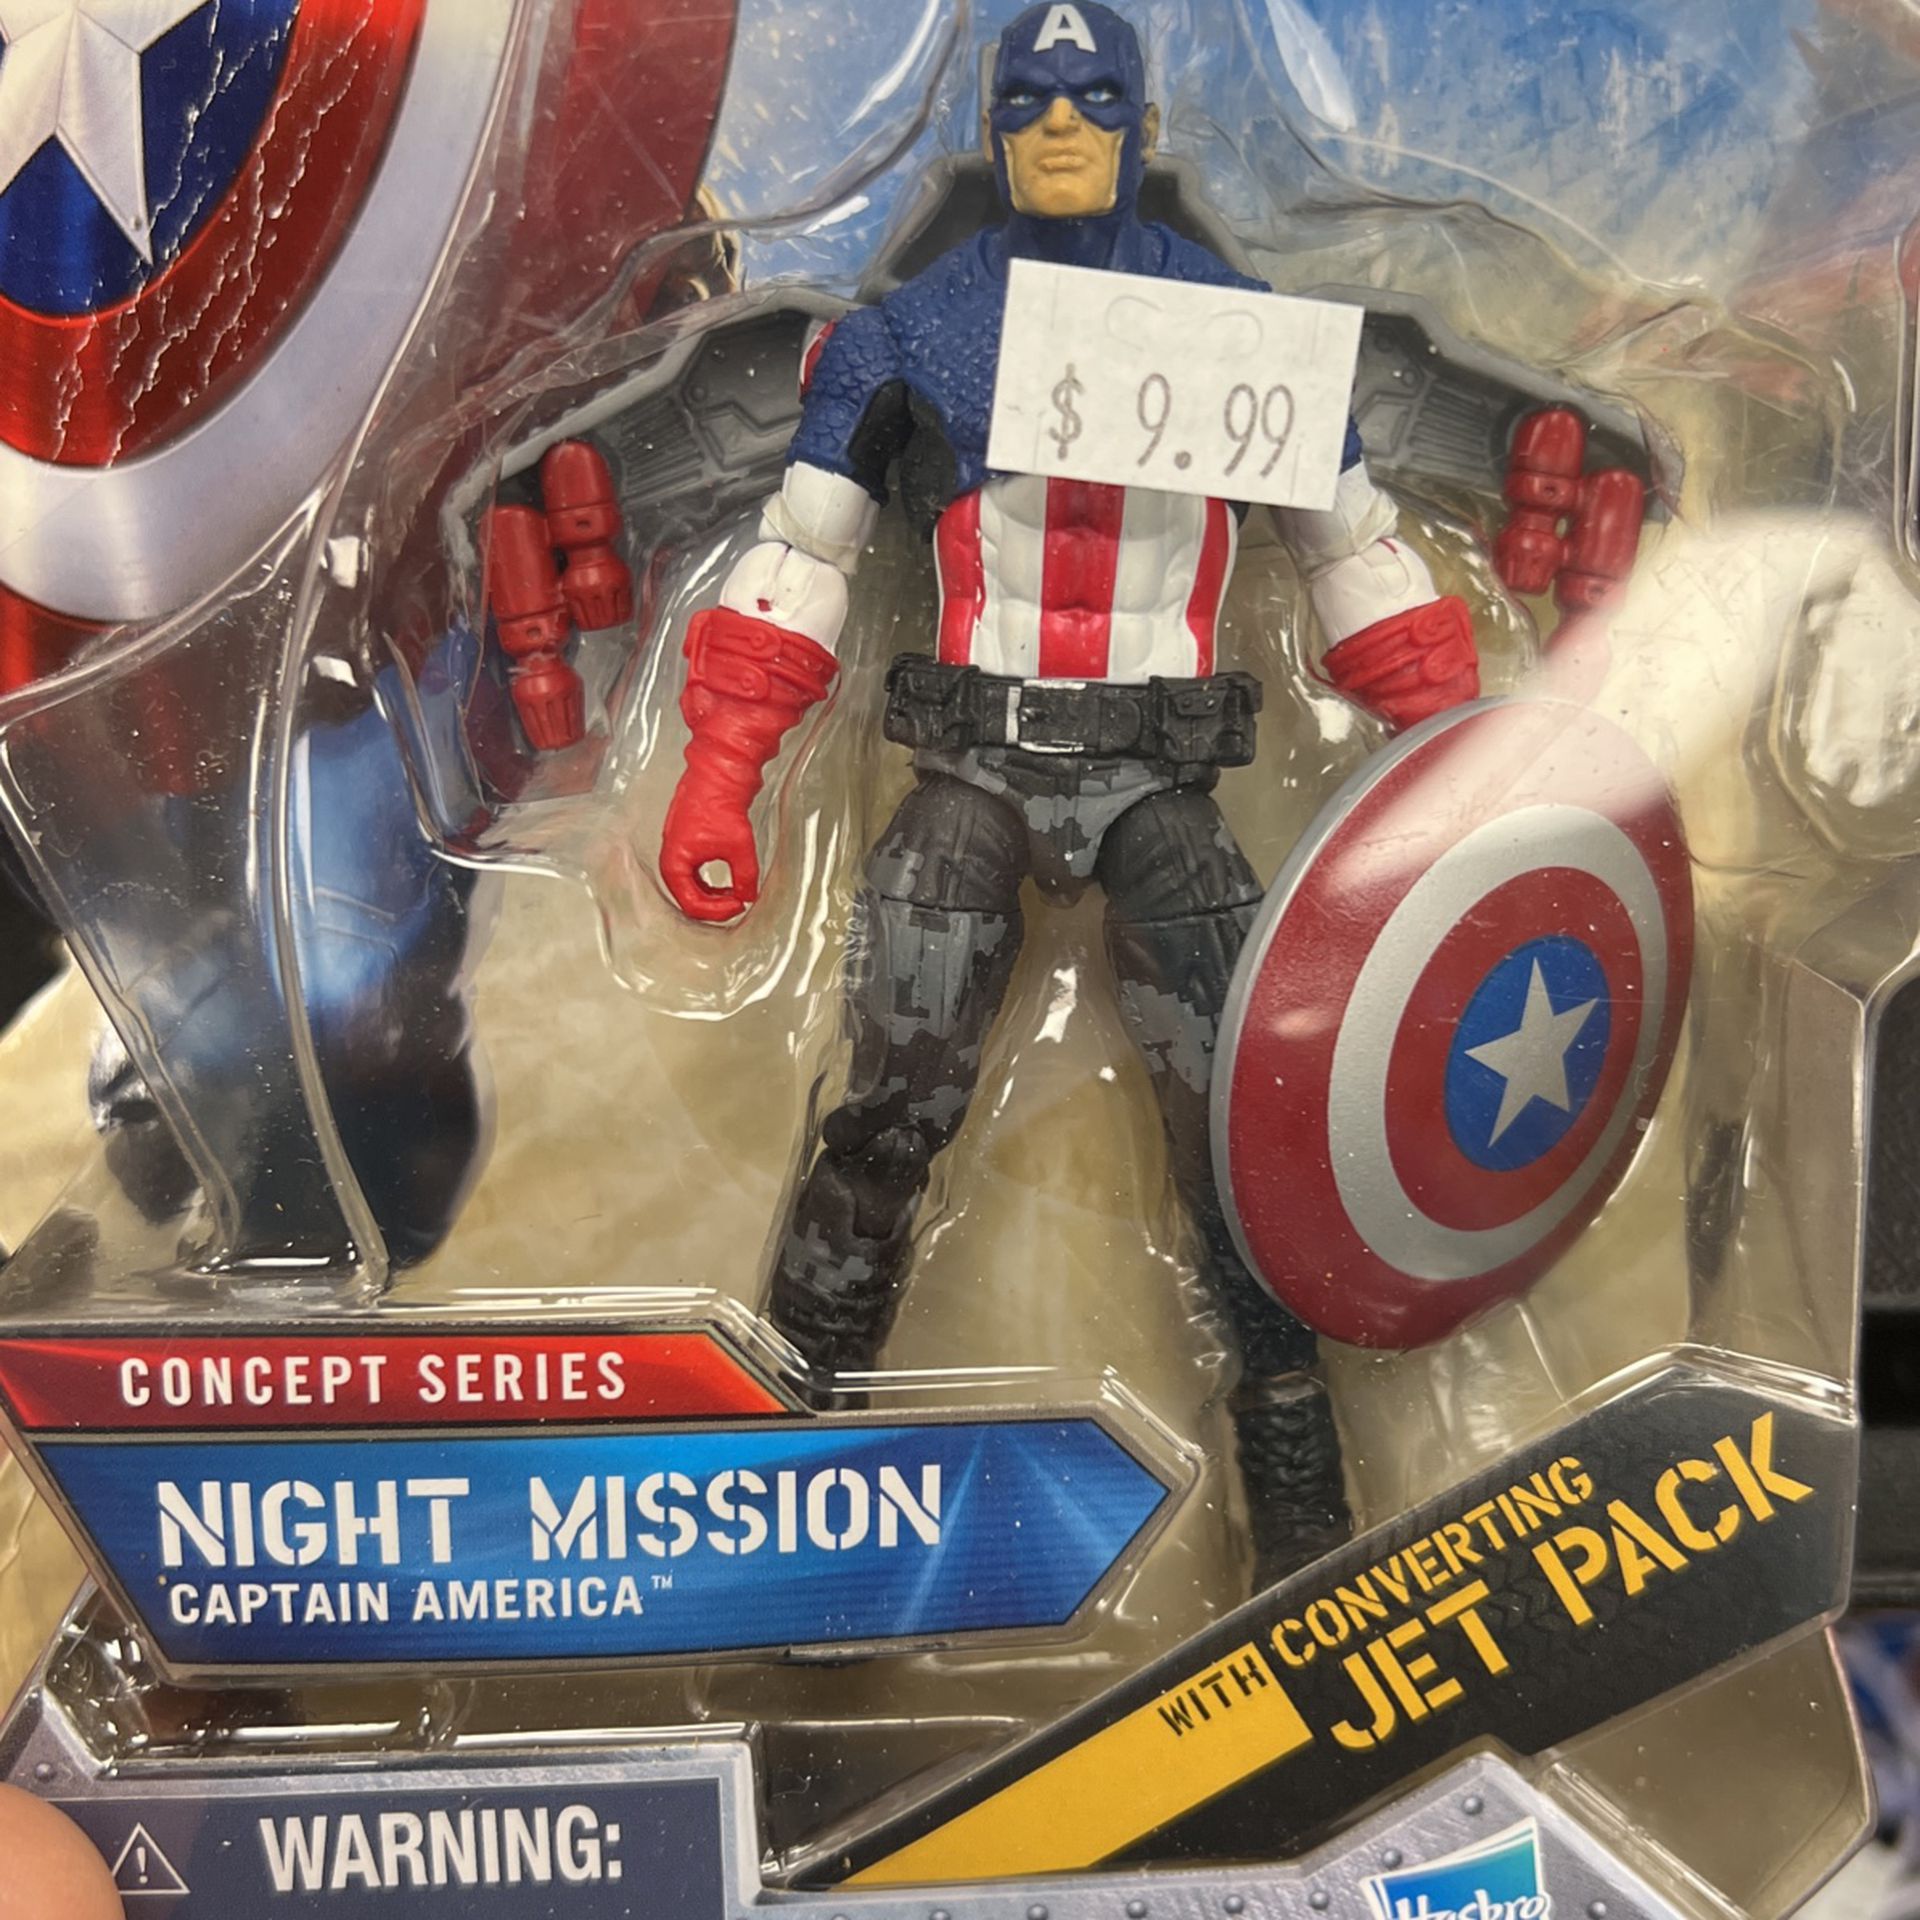 Captain America Marvel Action Figure